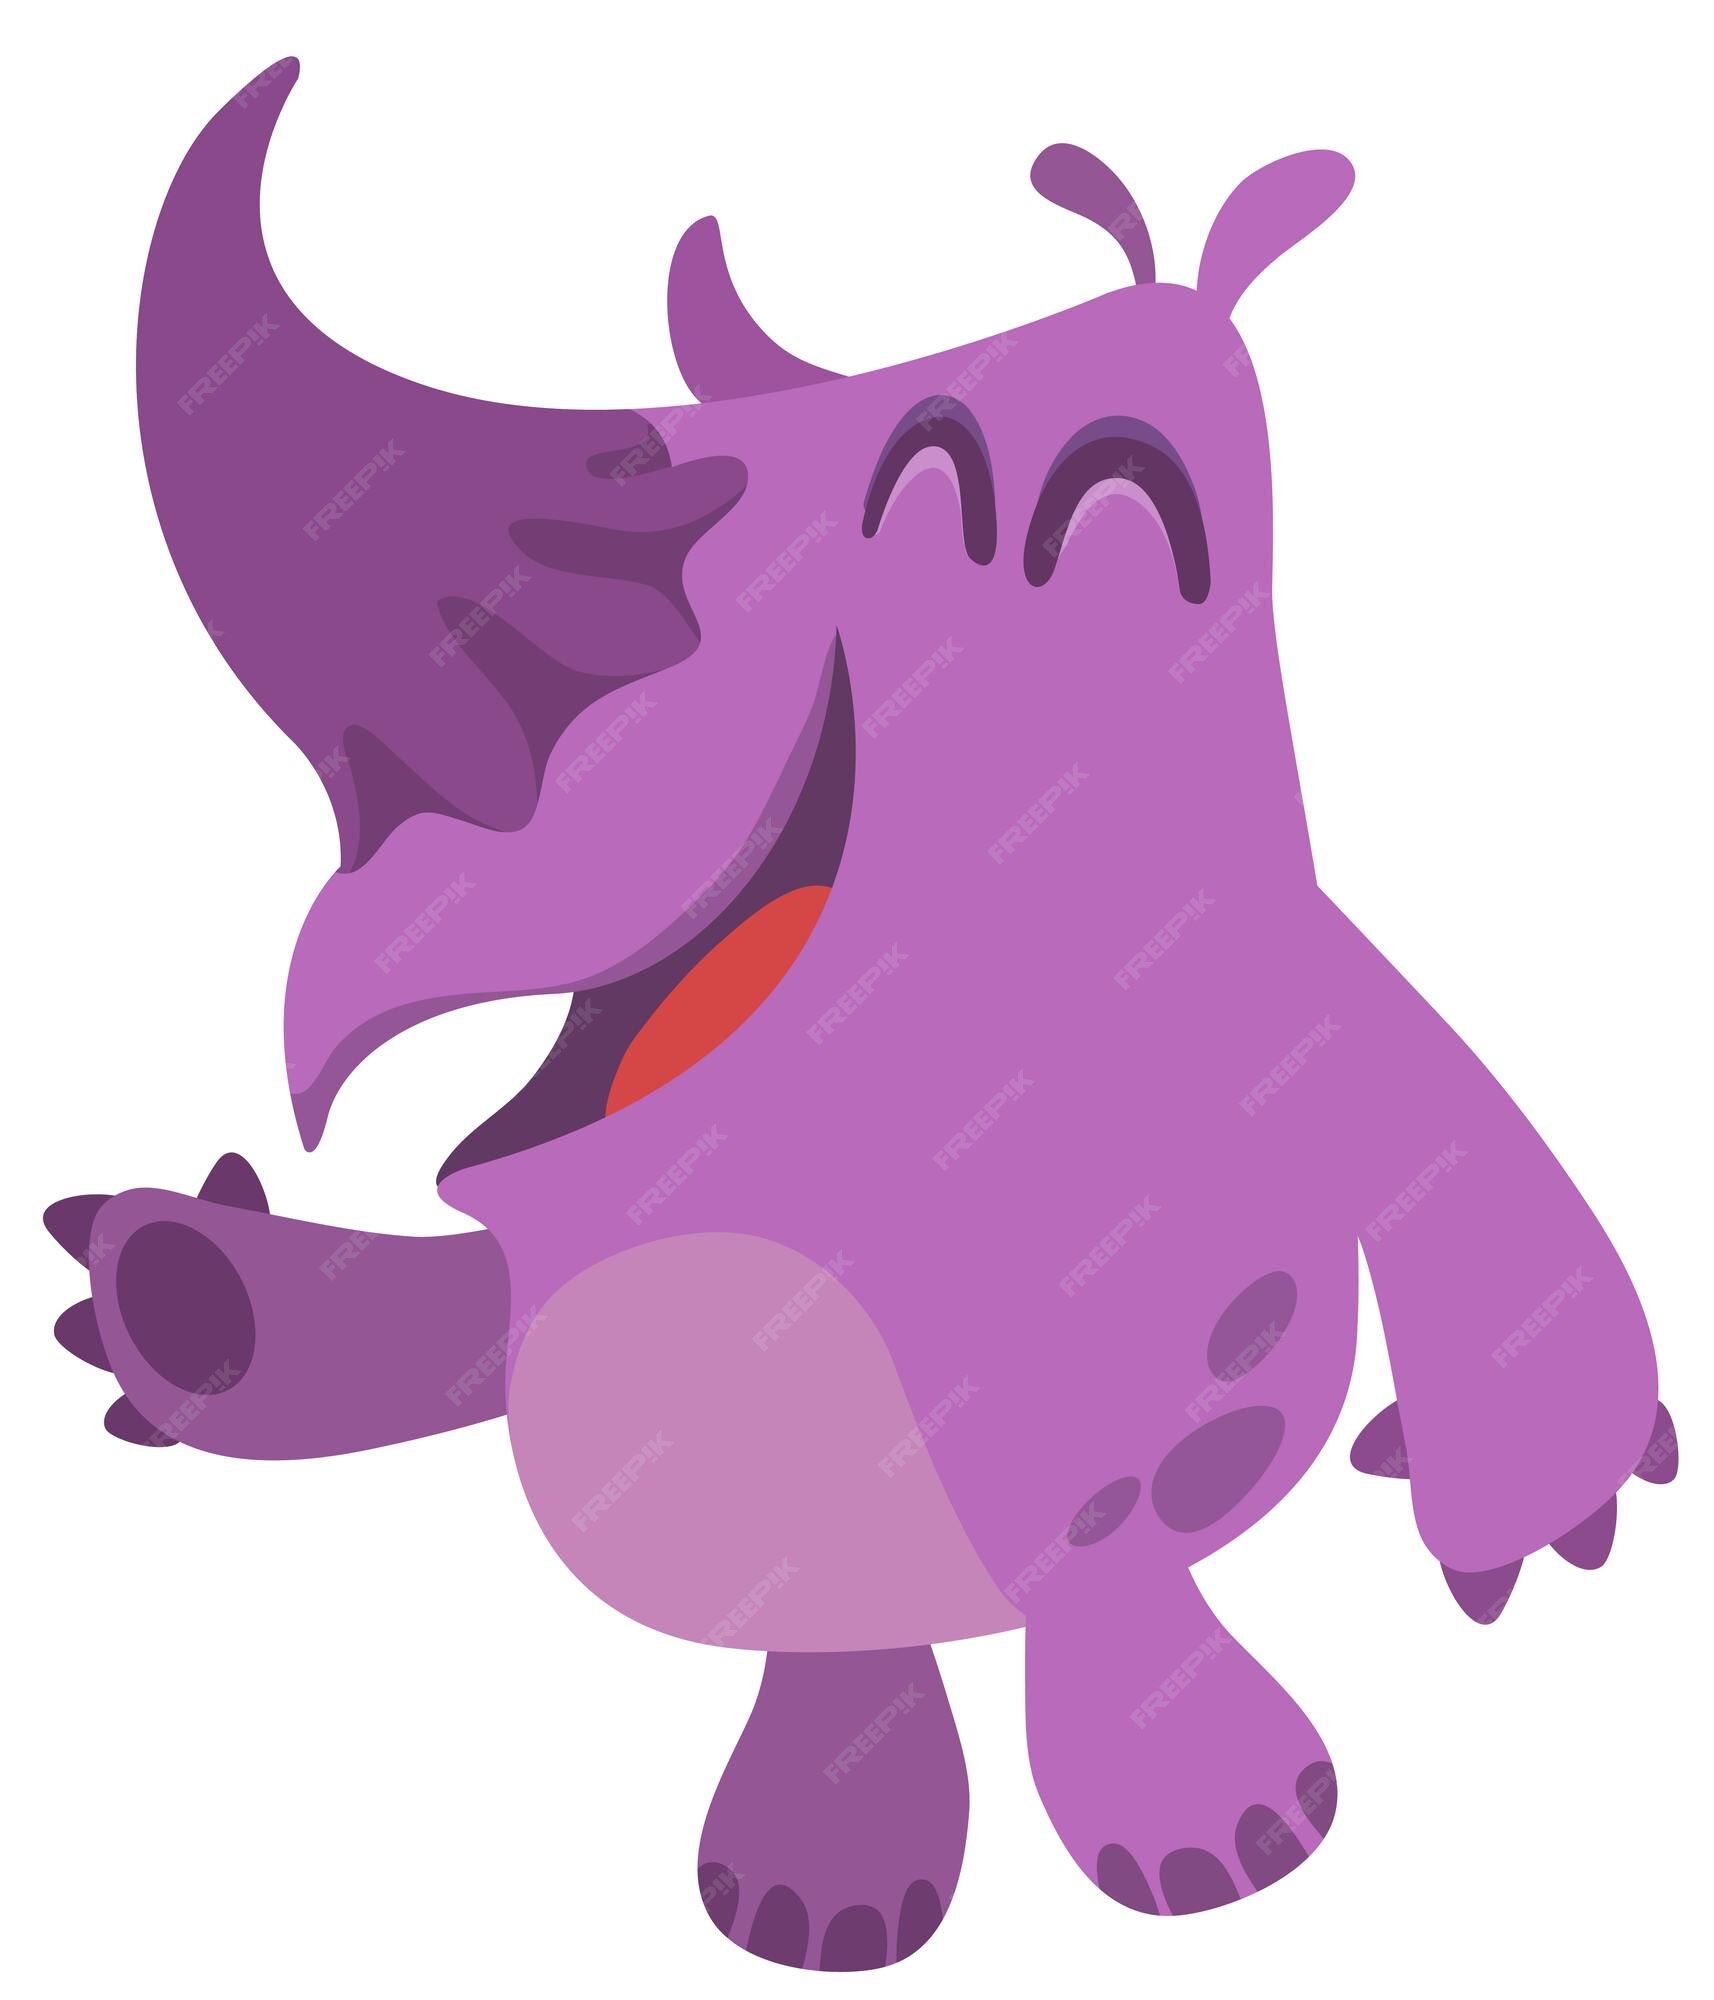 Premium Vector | Cartoon rhino vector illustration of funny rhinoceros